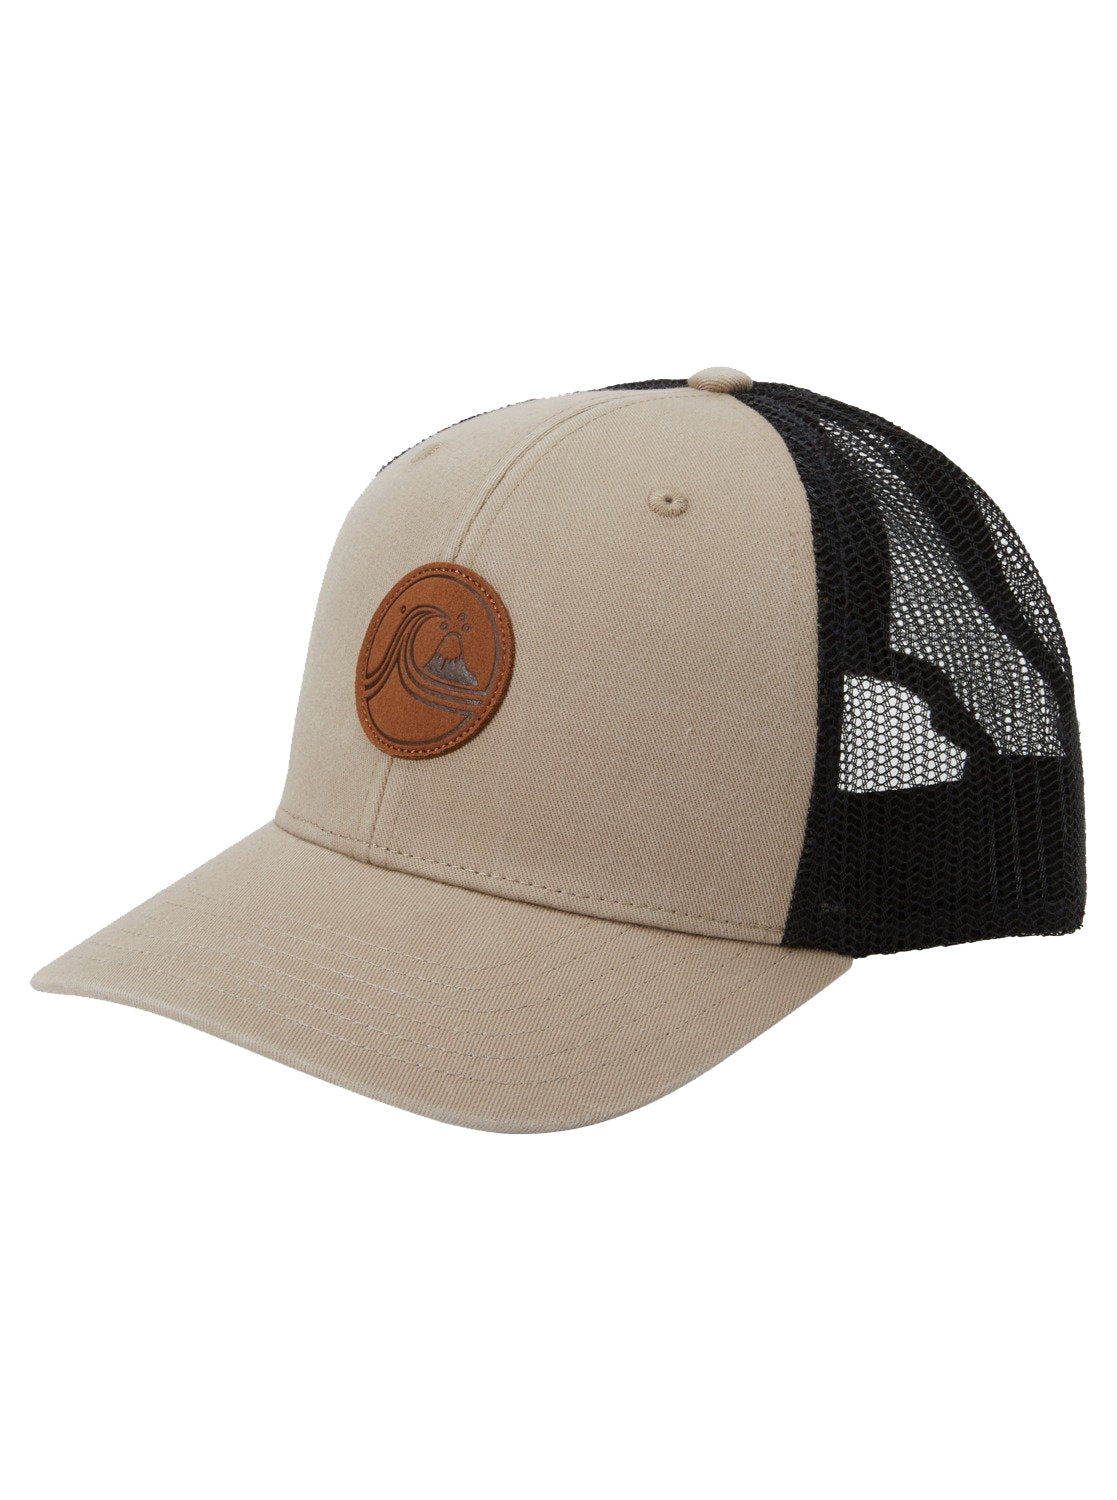 Quiksilver Brick Hollows Snapback Hat